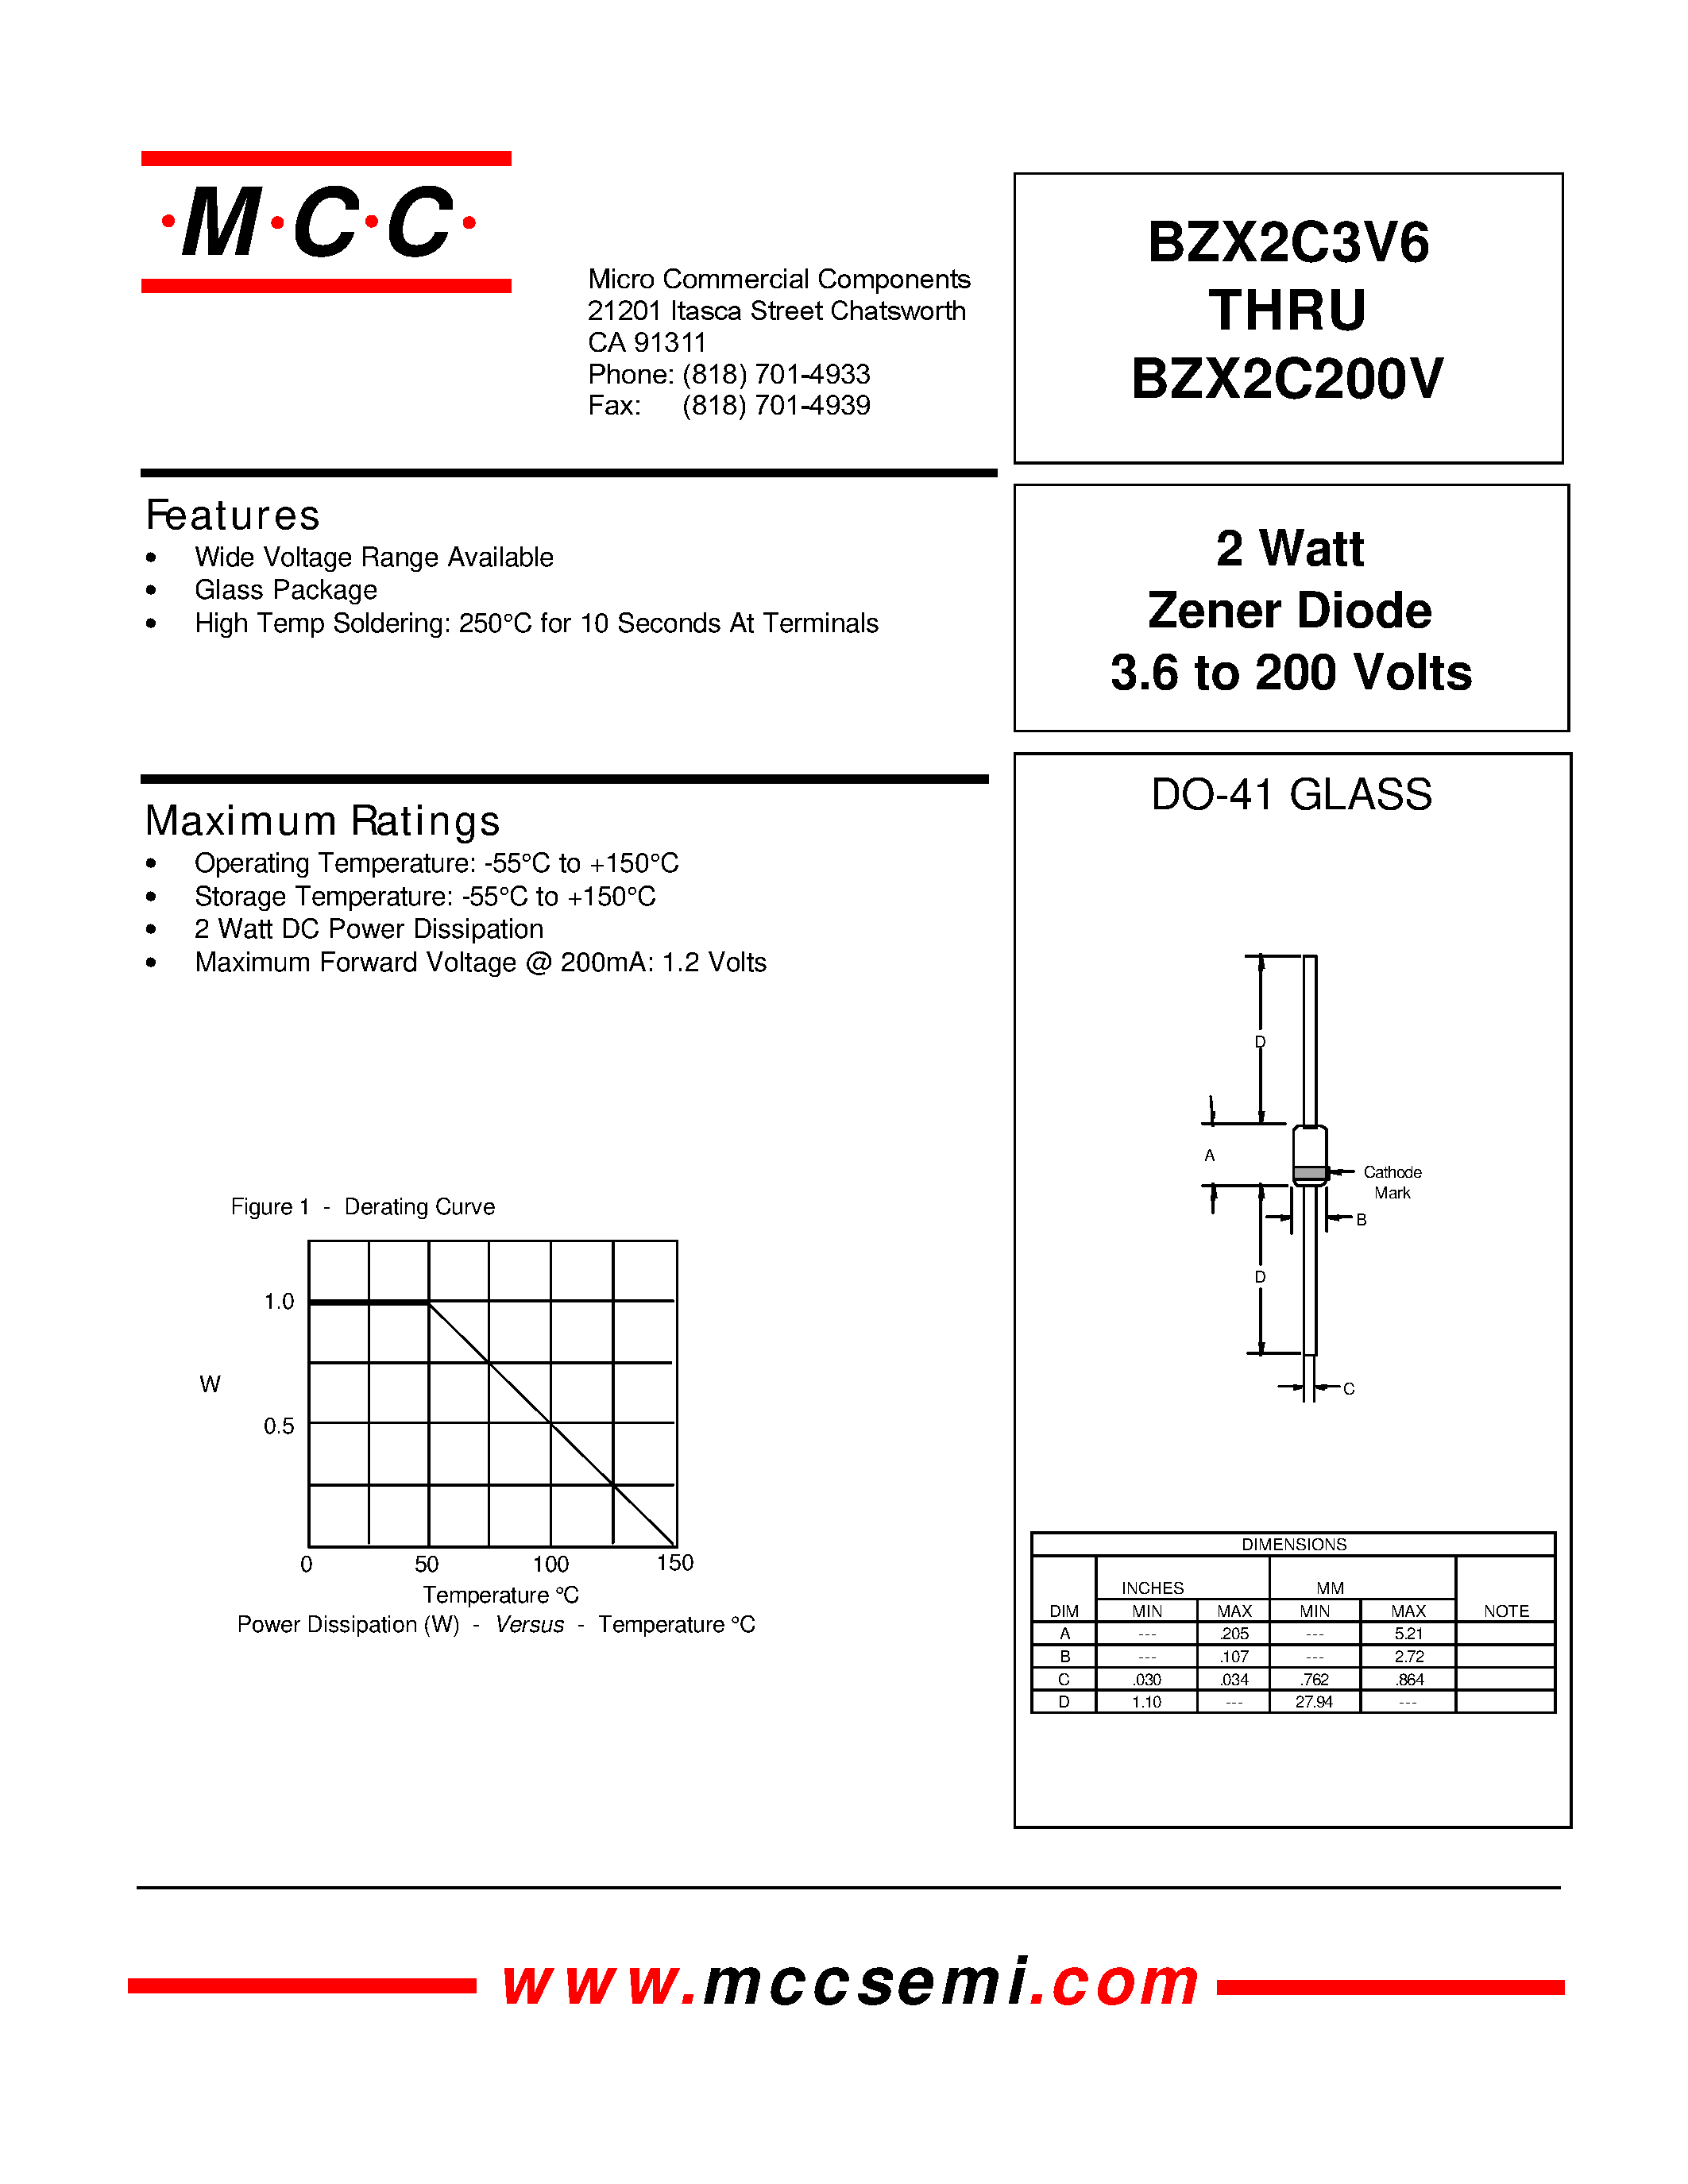 Даташит BZX2C39V - 2 Watt Zener Diode 3.6 to 200 Volts страница 1